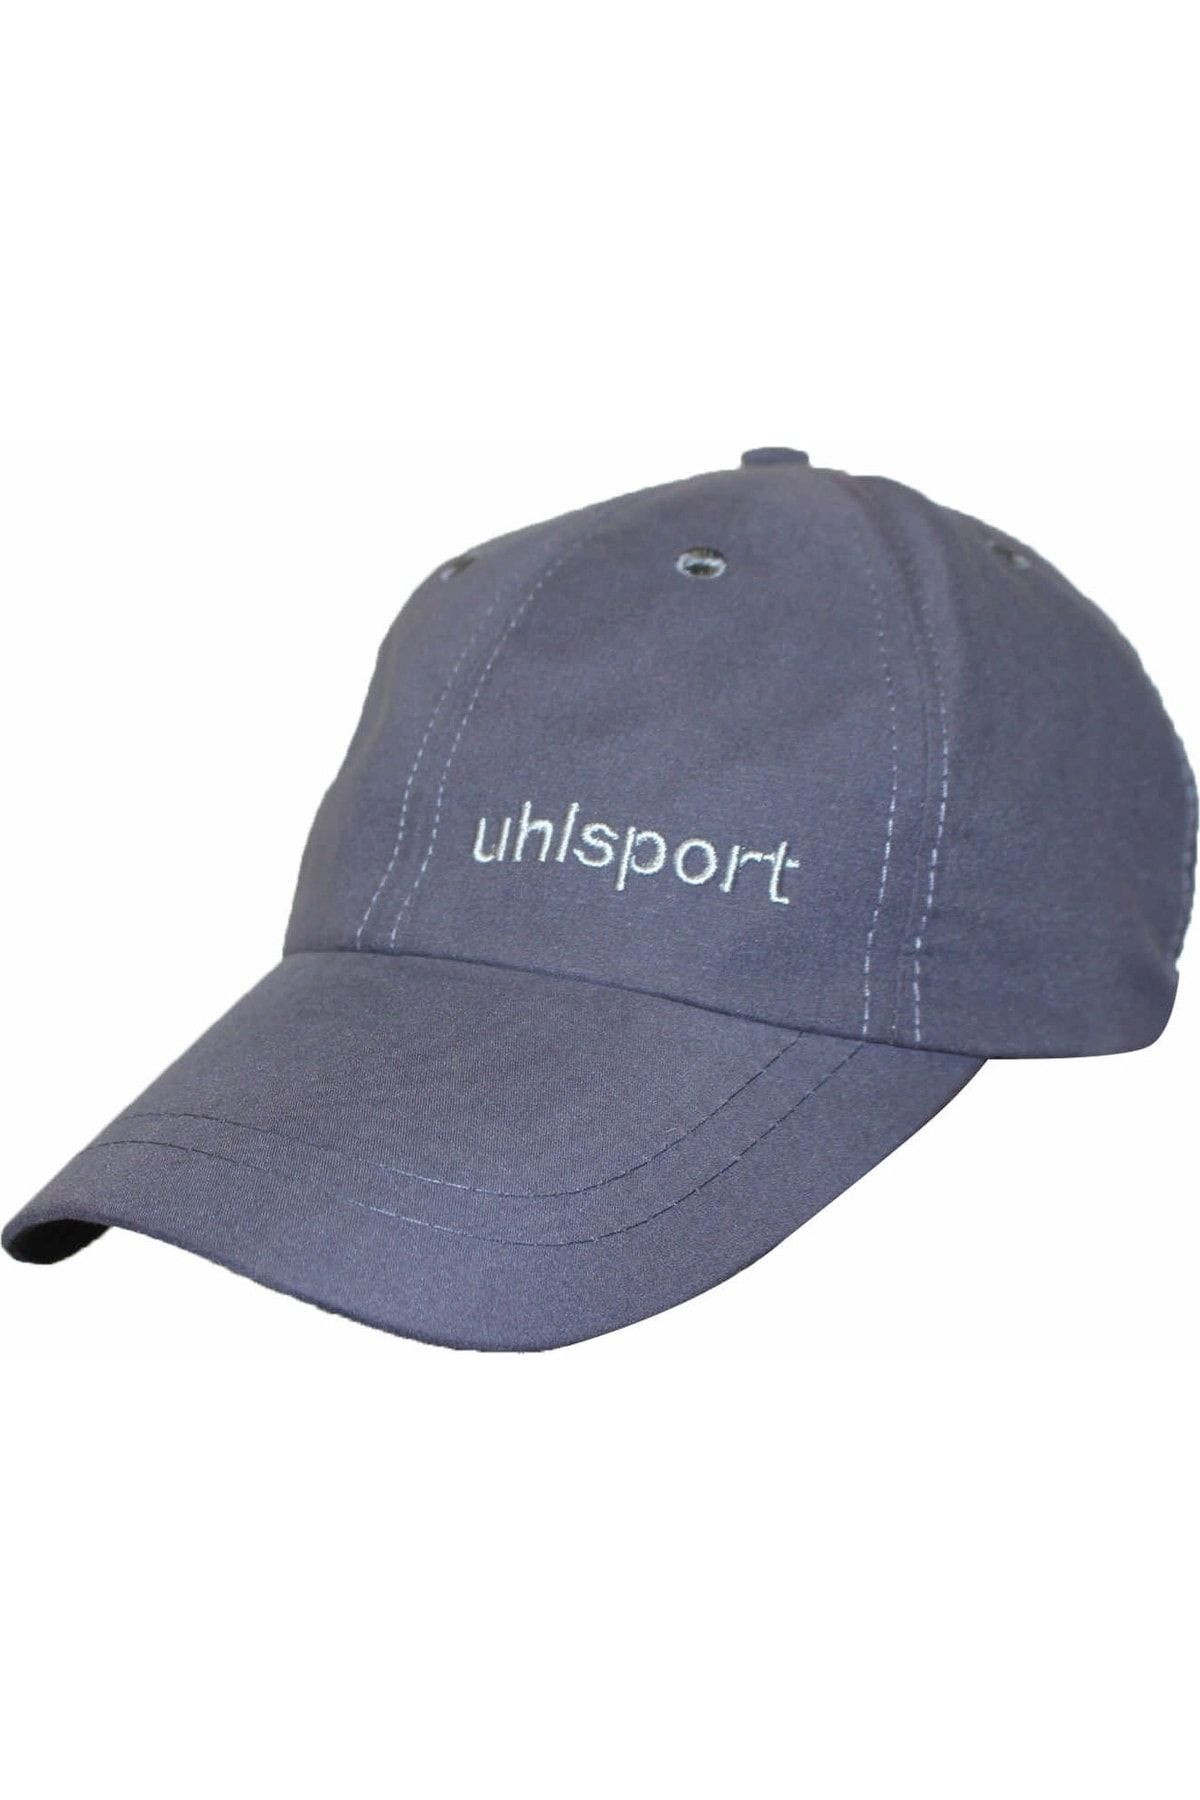 uhlsport 20.008 Mıcro Leo Unisex Şapka Antrasit 8201010